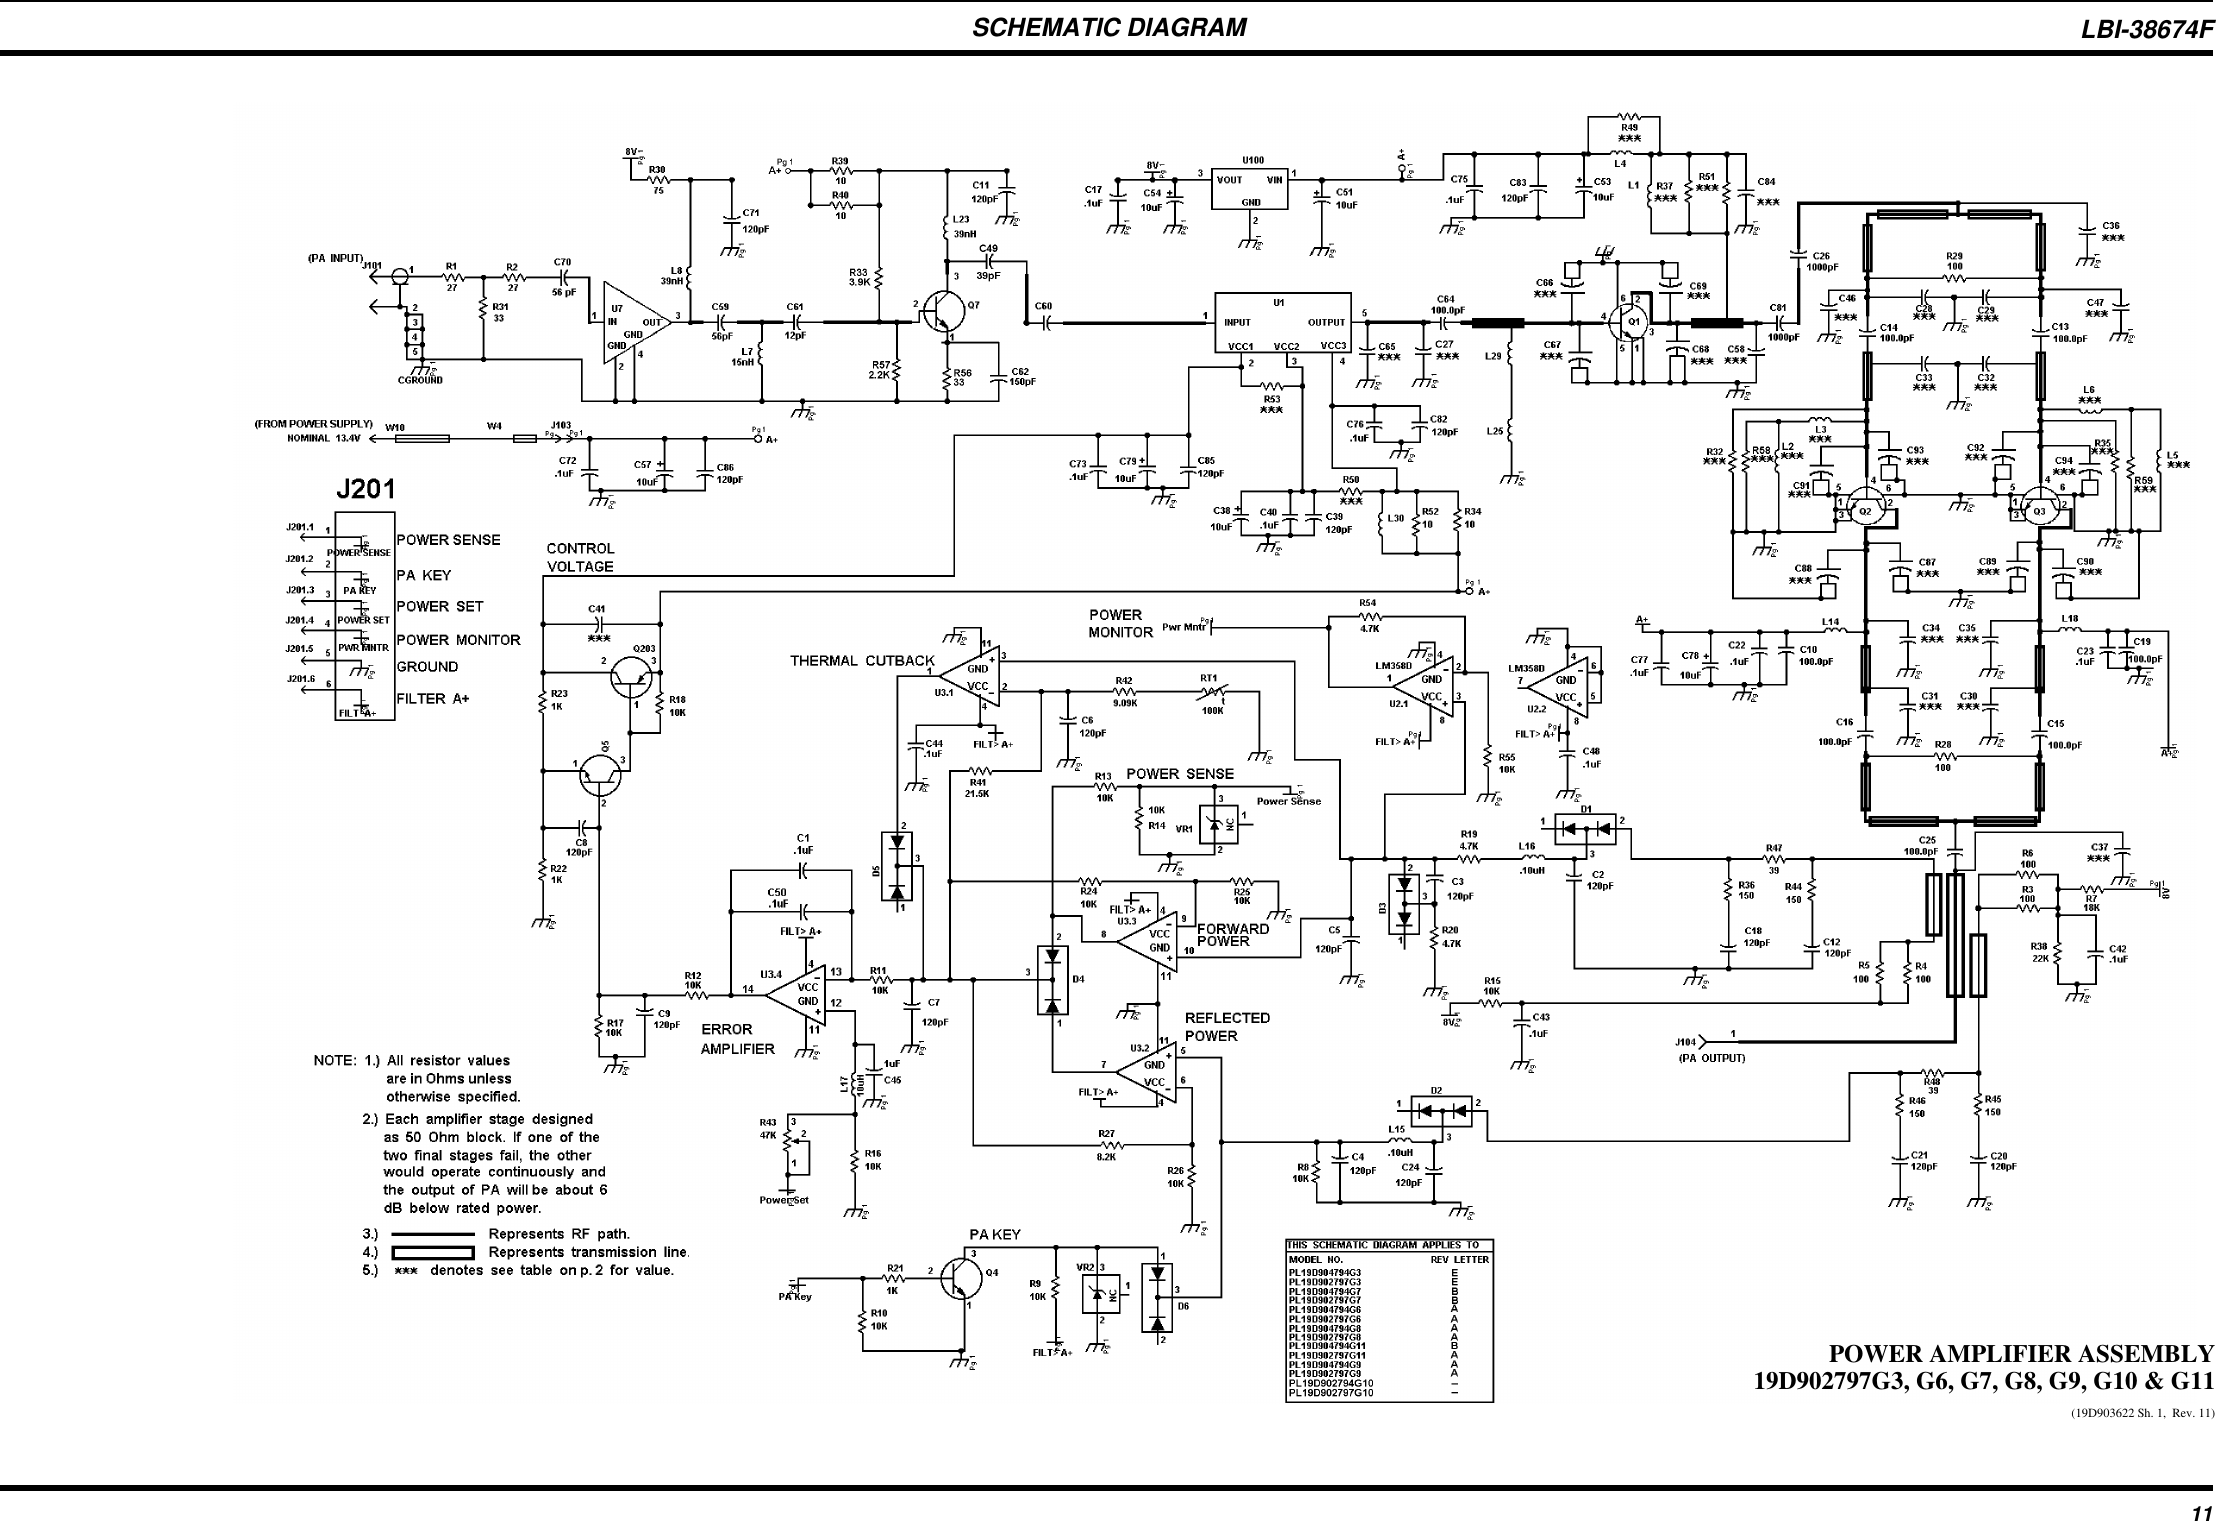 SCHEMATIC DIAGRAMPOWER AMPLIFIER ASSEMBLY19D902797G3, G6, G7, G8, G9, G10 &amp; G11(19D903622 Sh. 1,  Rev. 11)LBI-38674F11